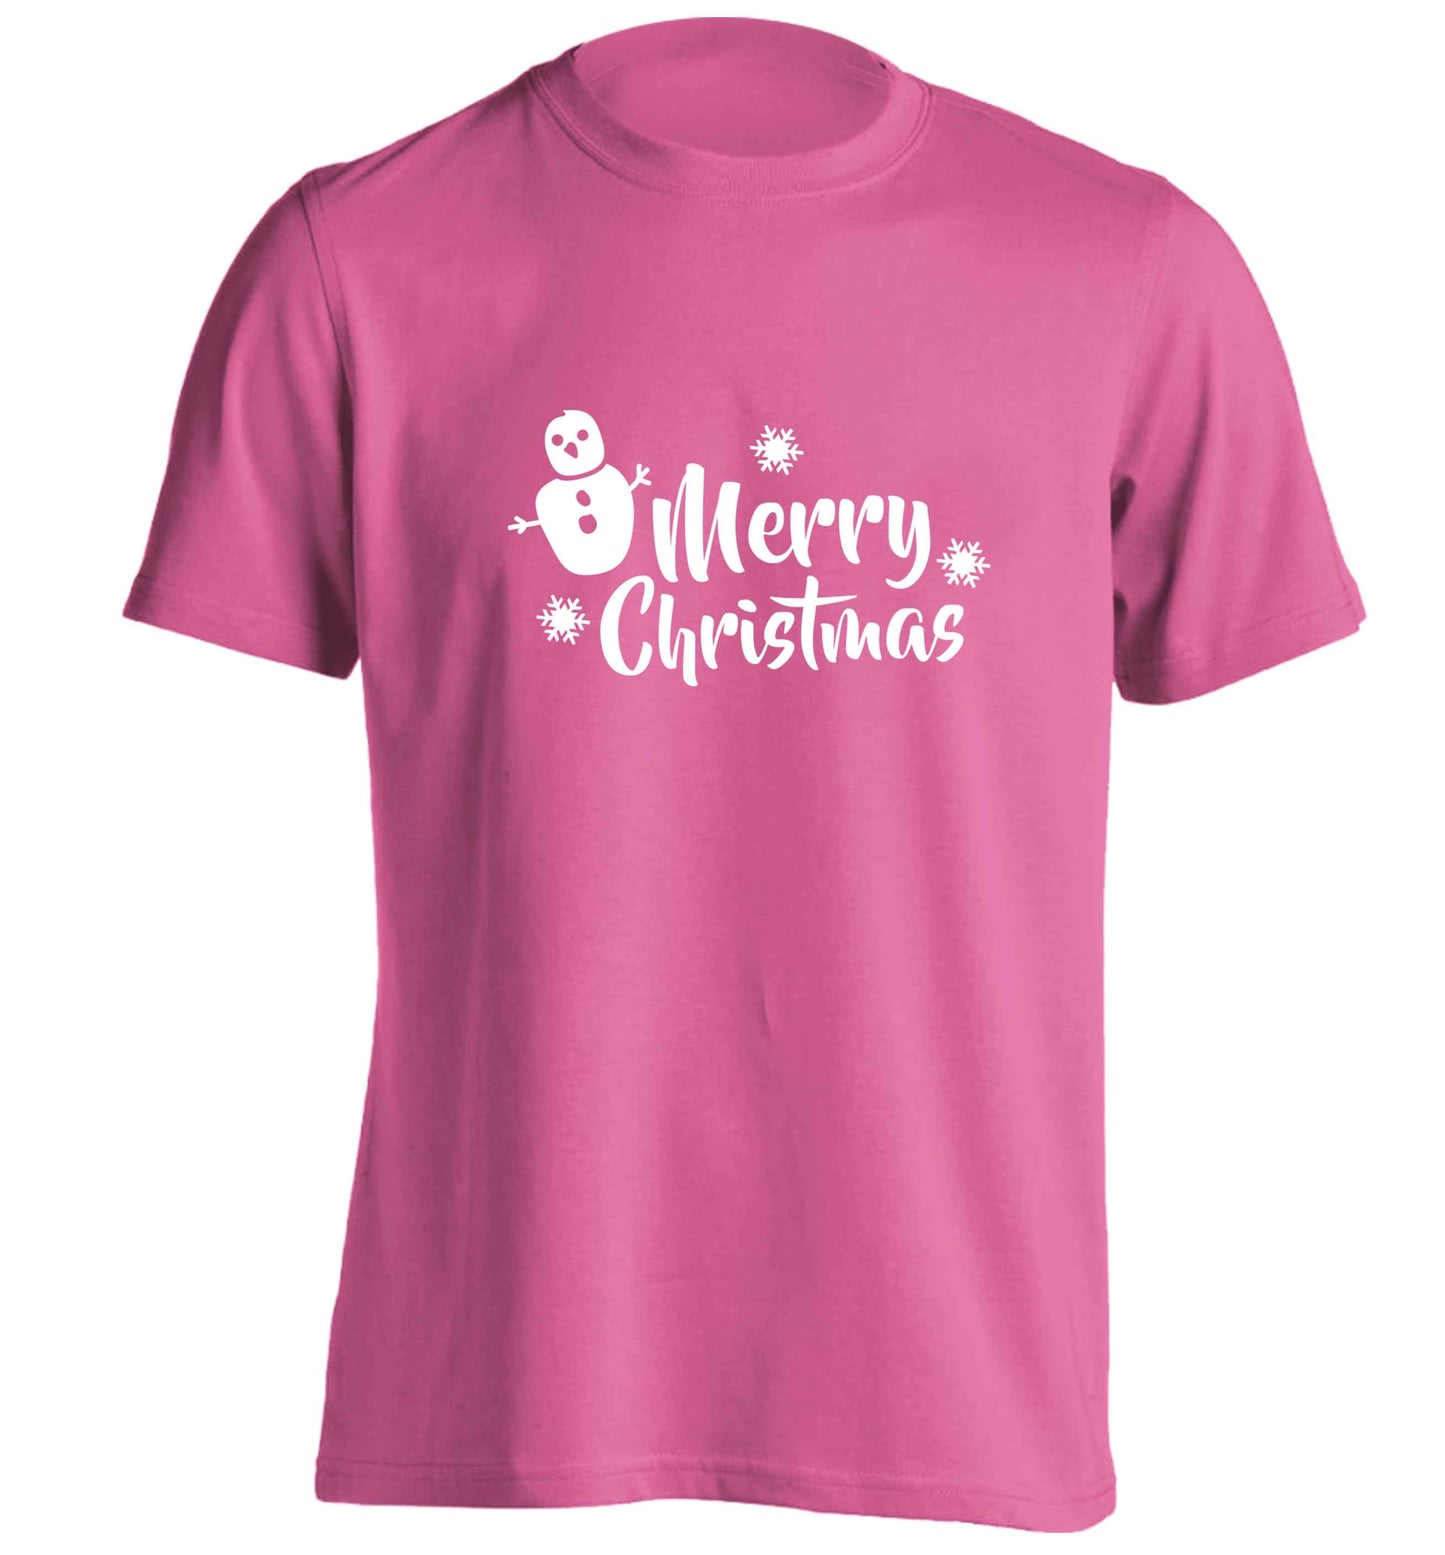 Merry Christmas - snowman adults unisex pink Tshirt 2XL